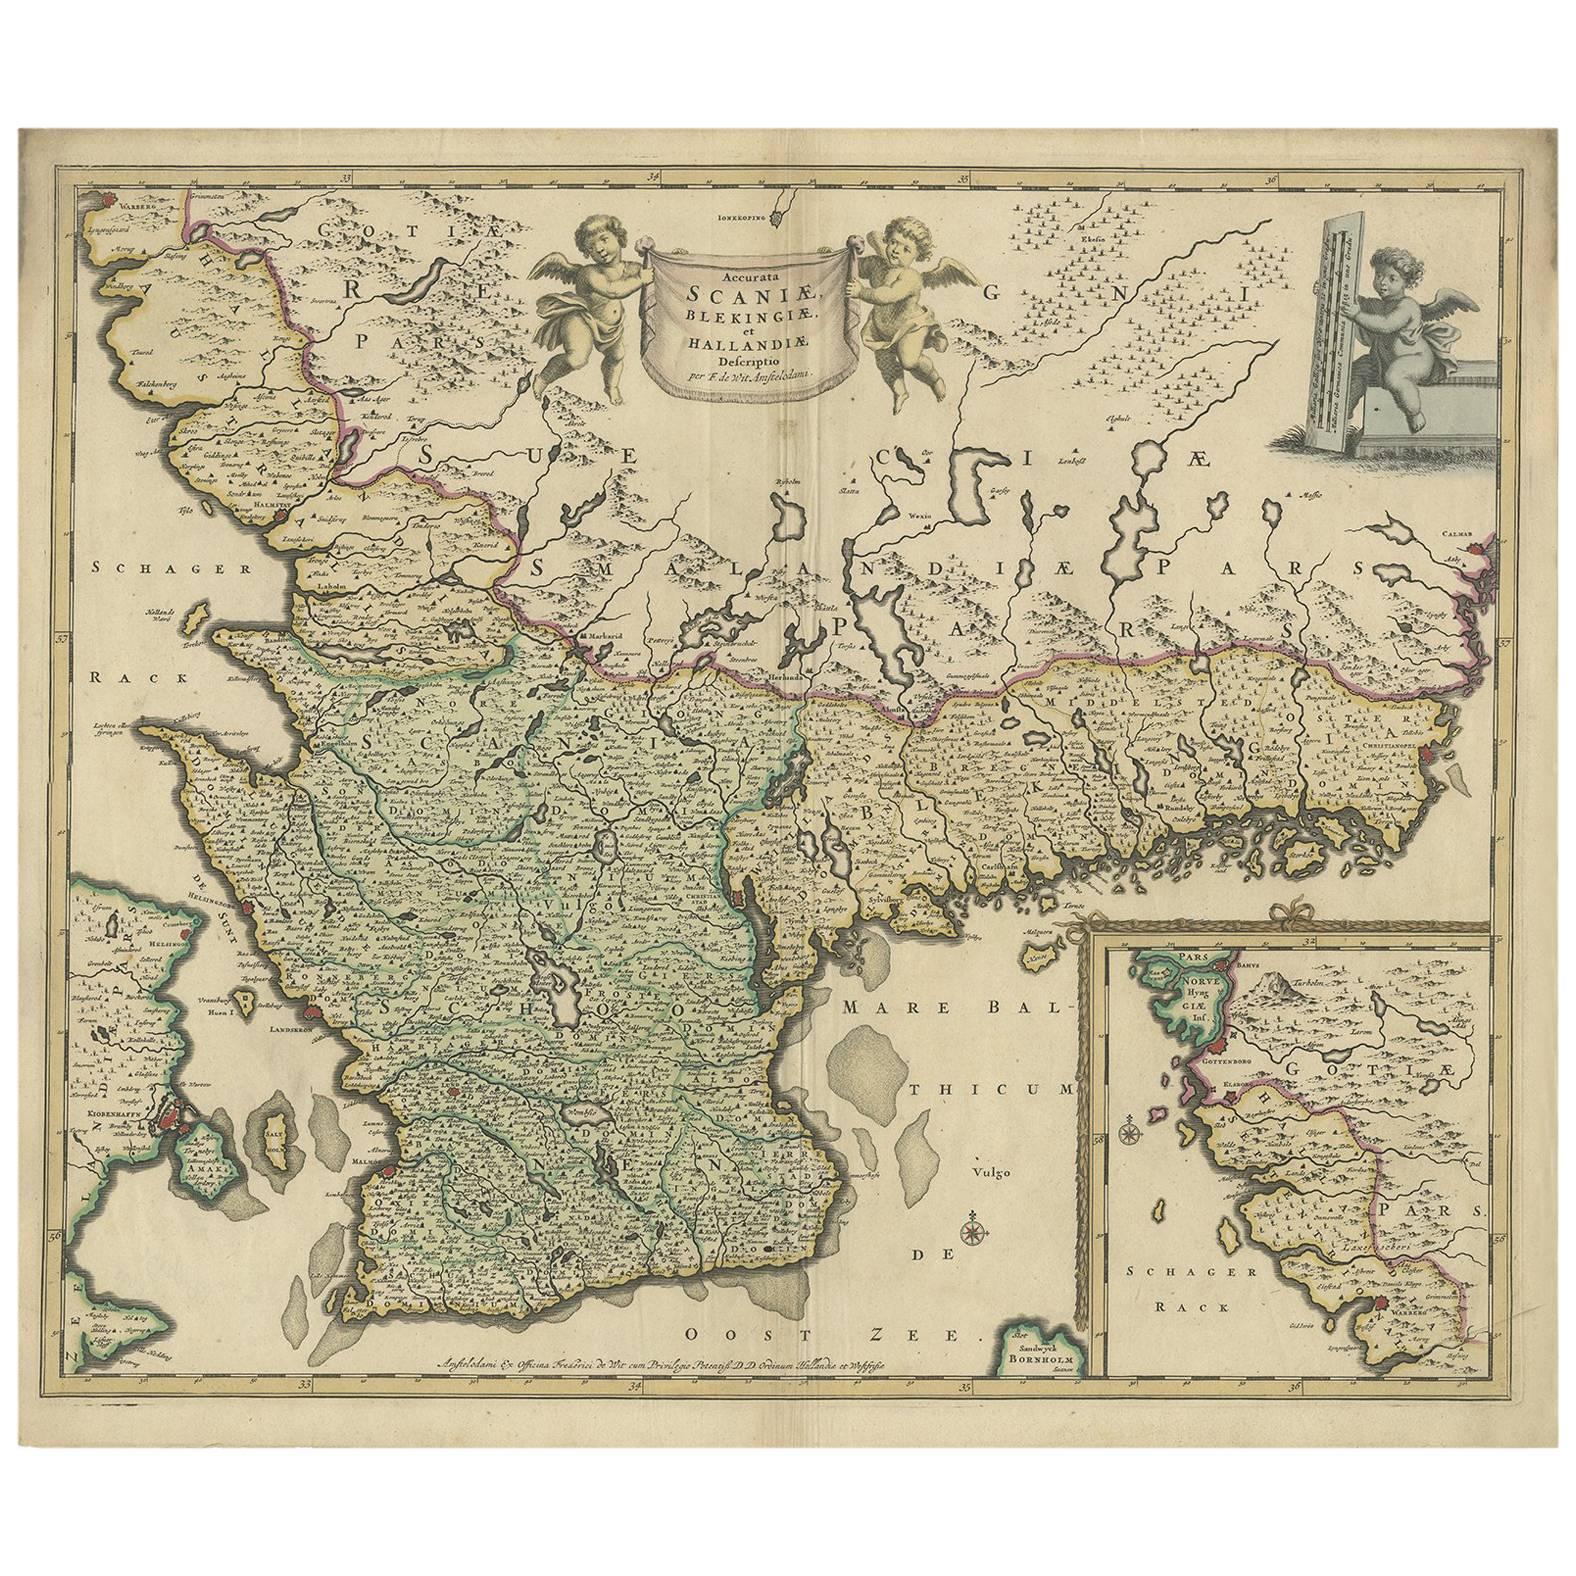 Antique Map of South Sweden 'Scandinavia' by F. de Wit, 1680